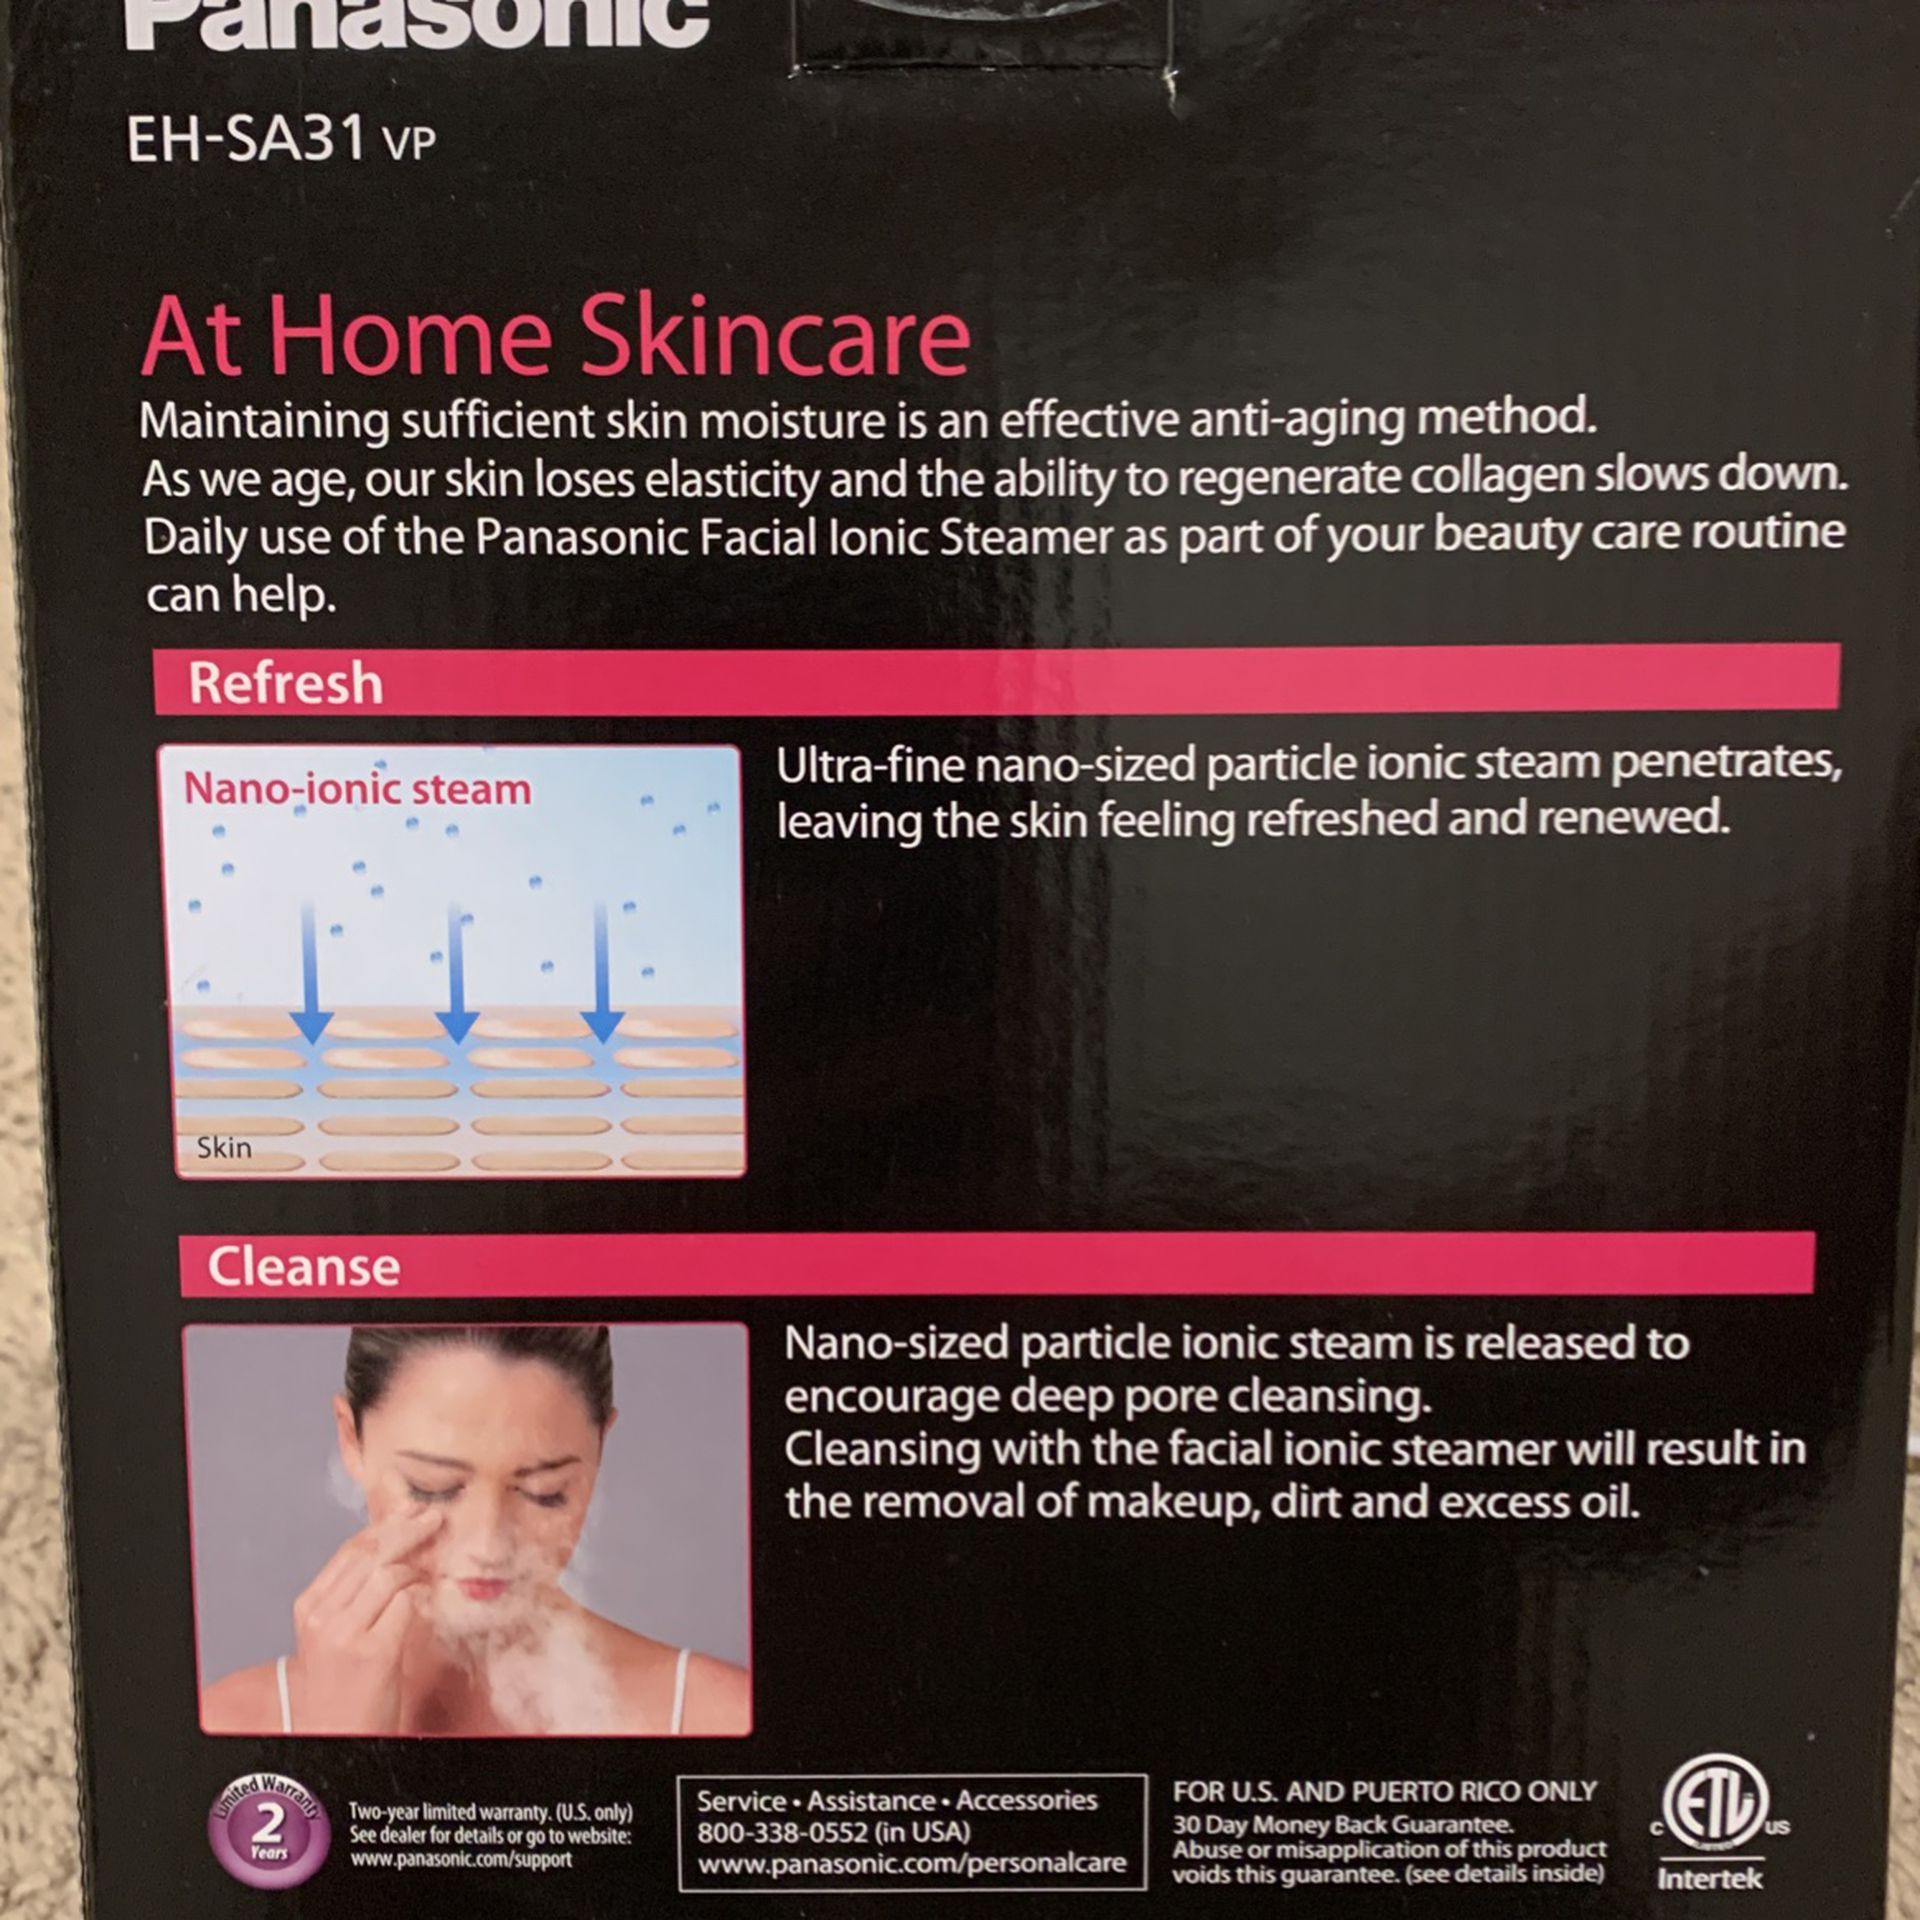 Panasonic Facial Ionic Stemer. Amazon price $180